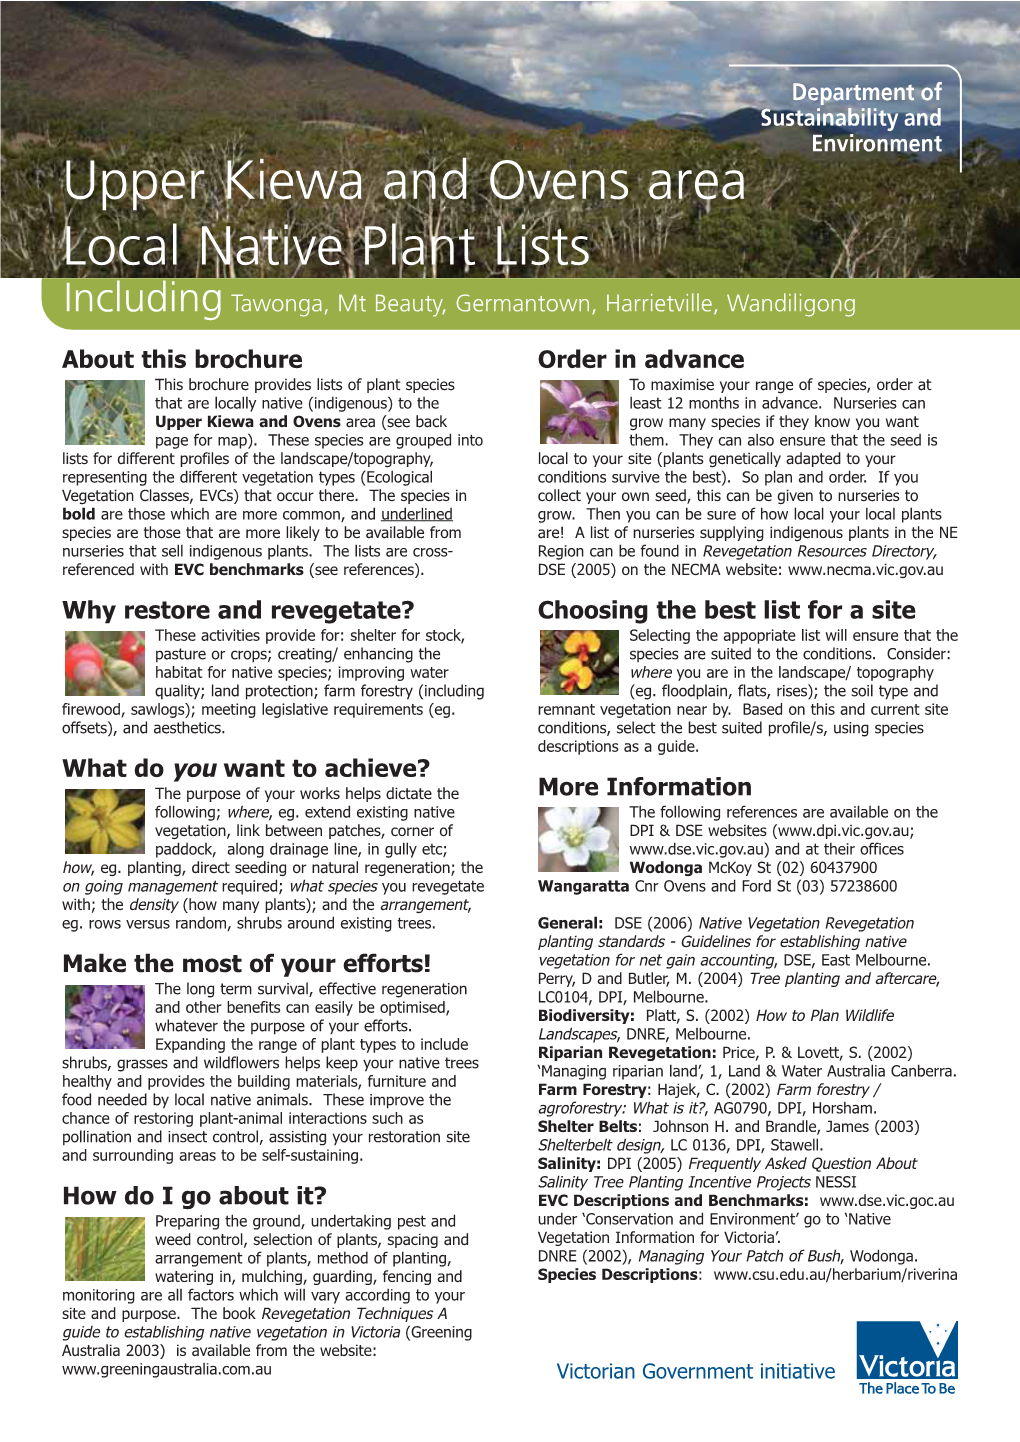 Upper Kiewa and Ovens Area Local Native Plant Lists Including Tawonga, Mt Beauty, Germantown, Harrietville, Wandiligong